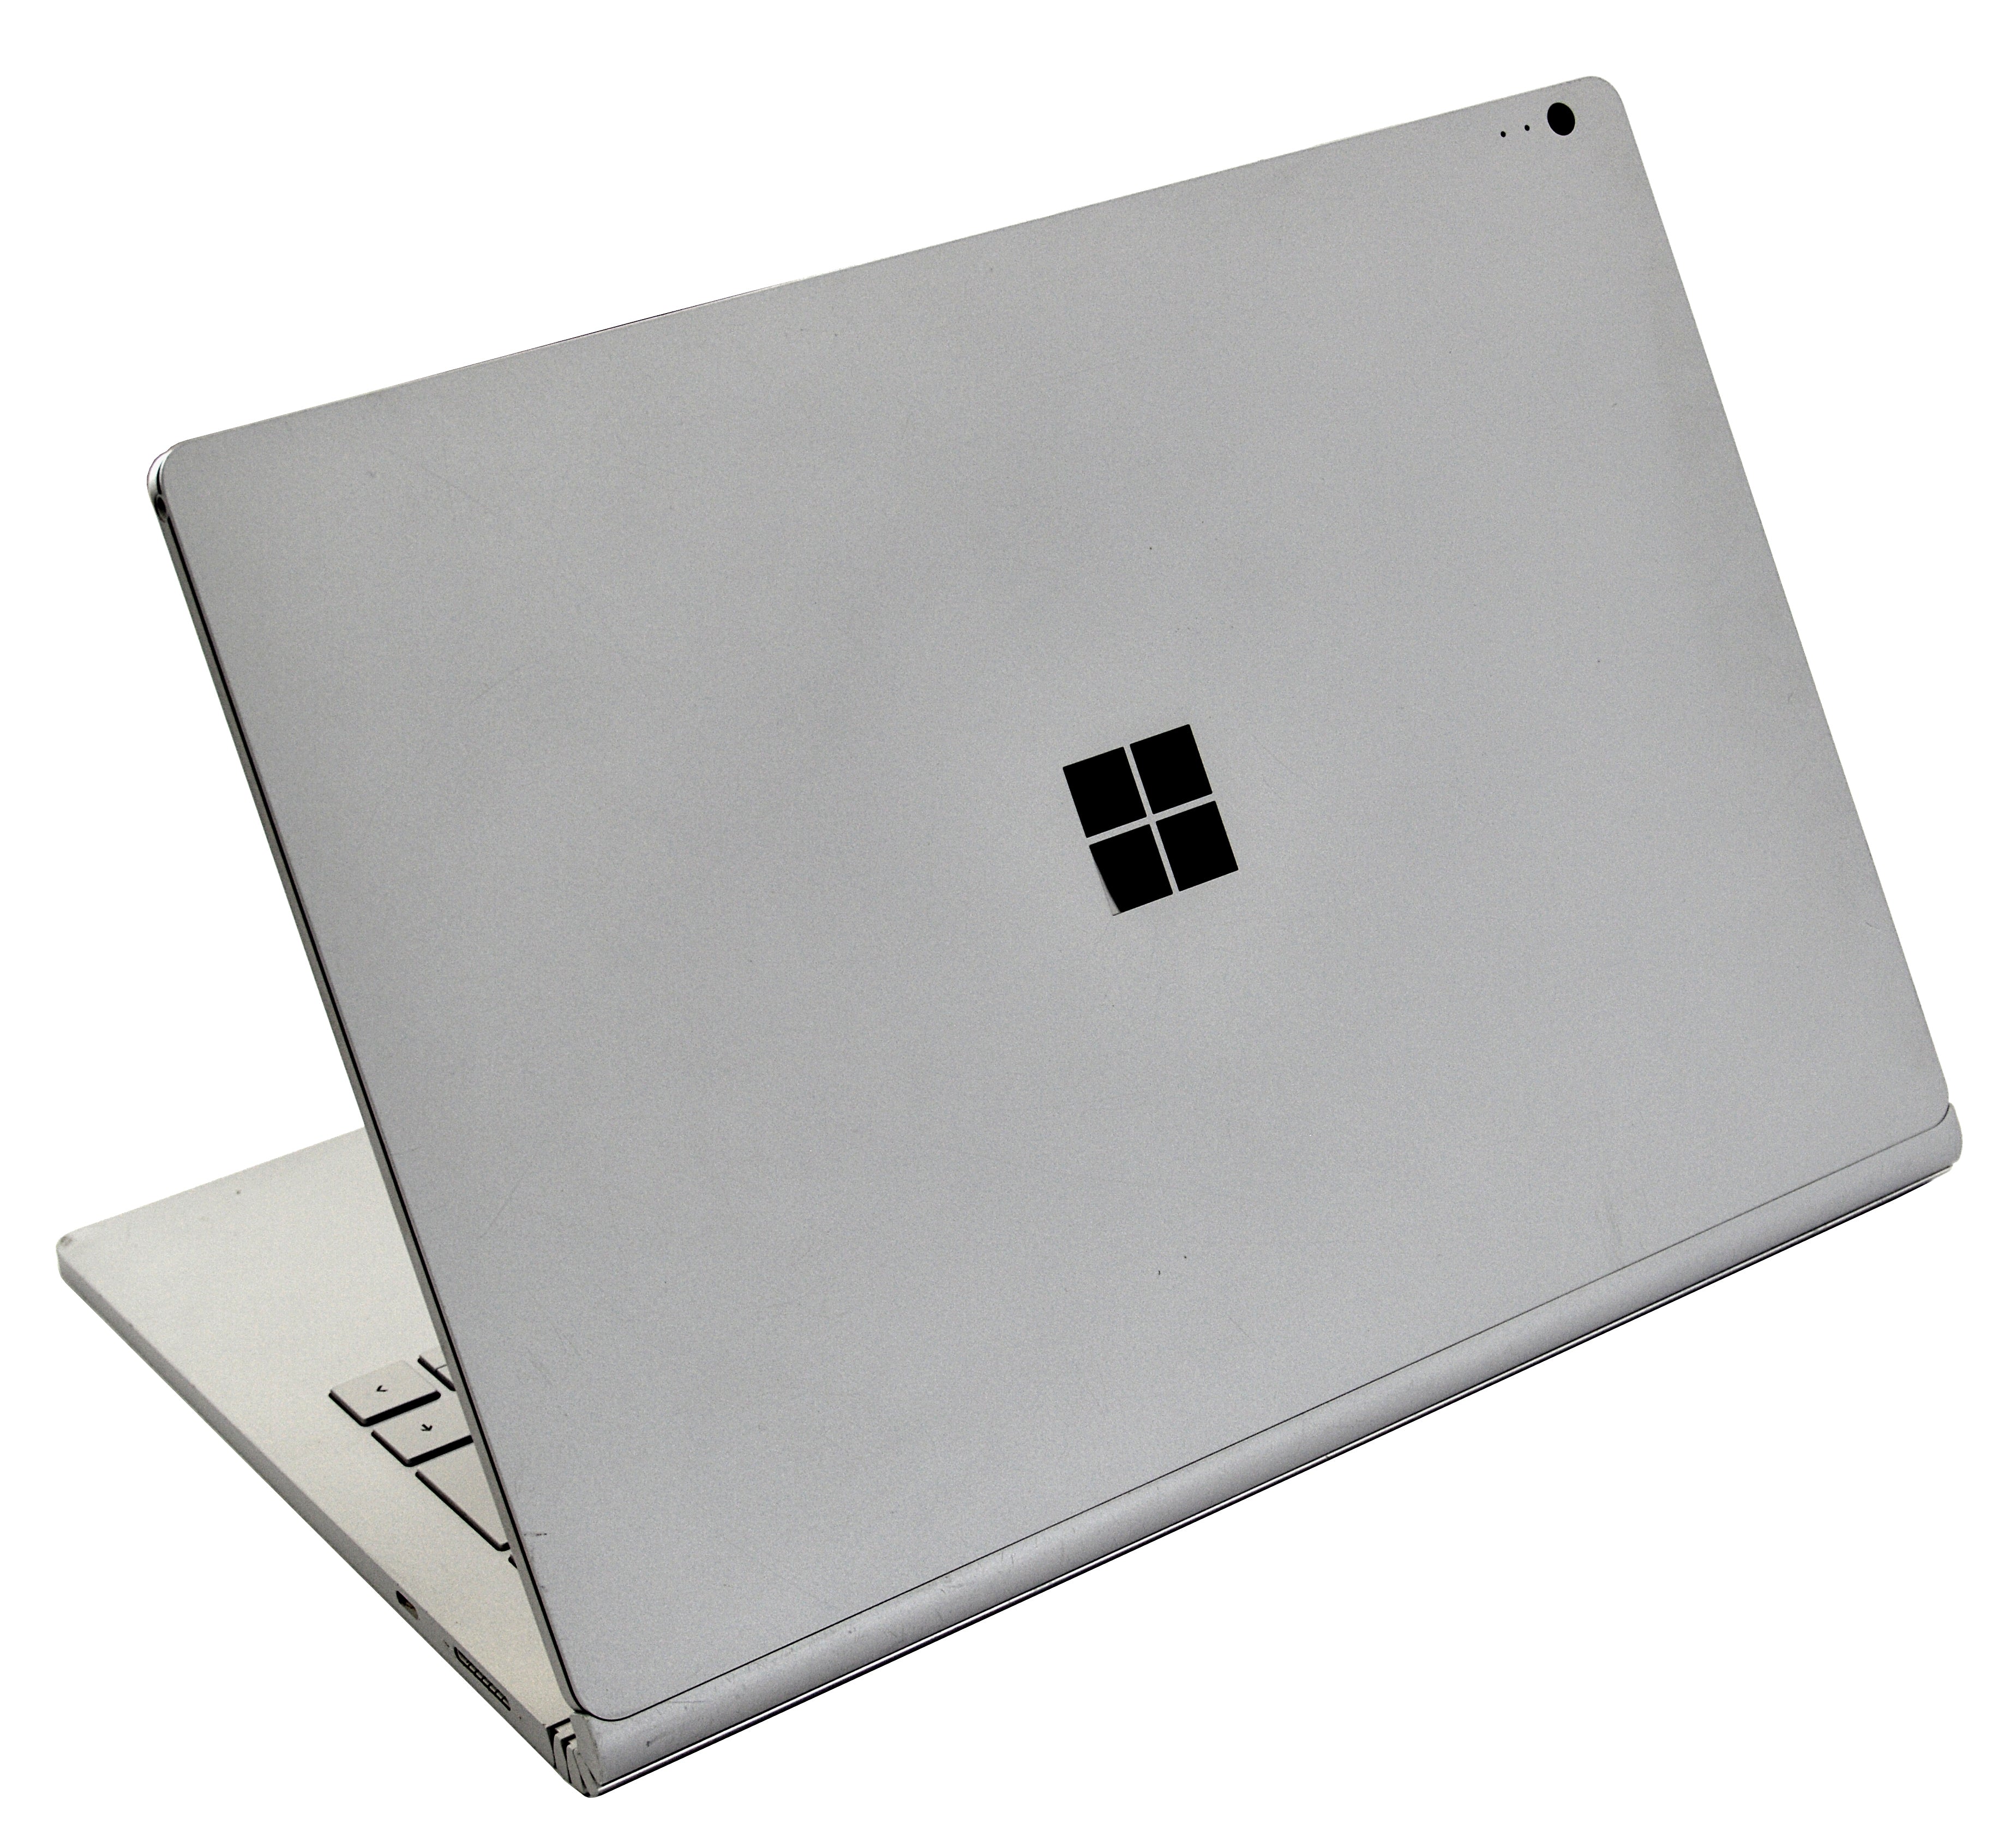 Microsoft Surface Book, 13"  Intel Core i7, 8GB RAM, 256GB SSD